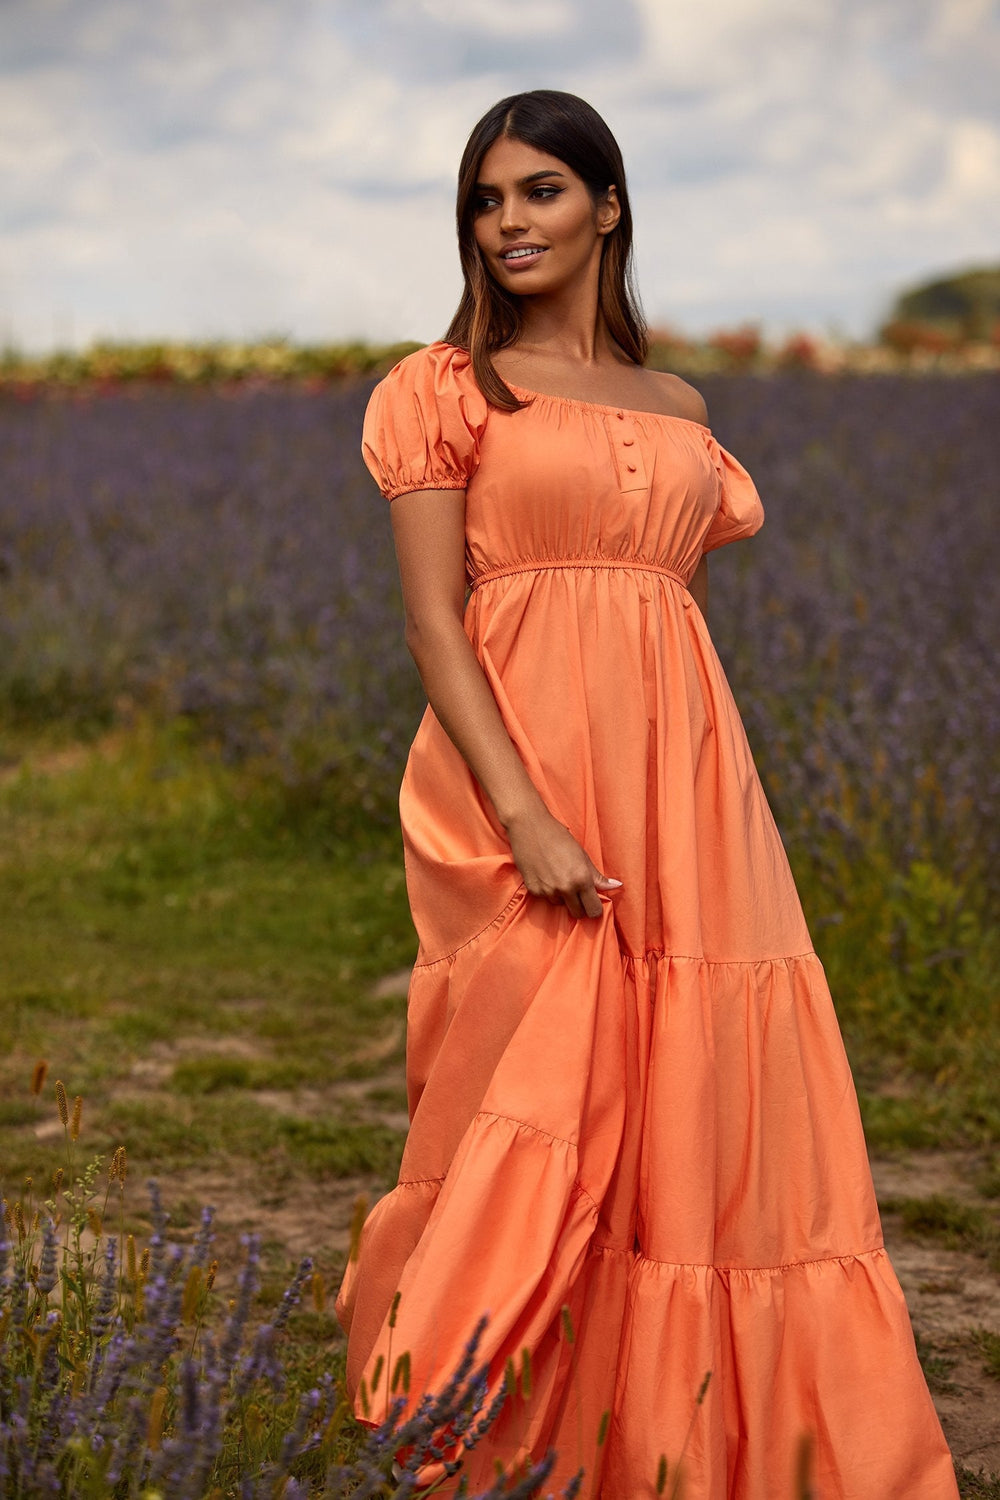 Marni Orange Poplin Maxi Dress